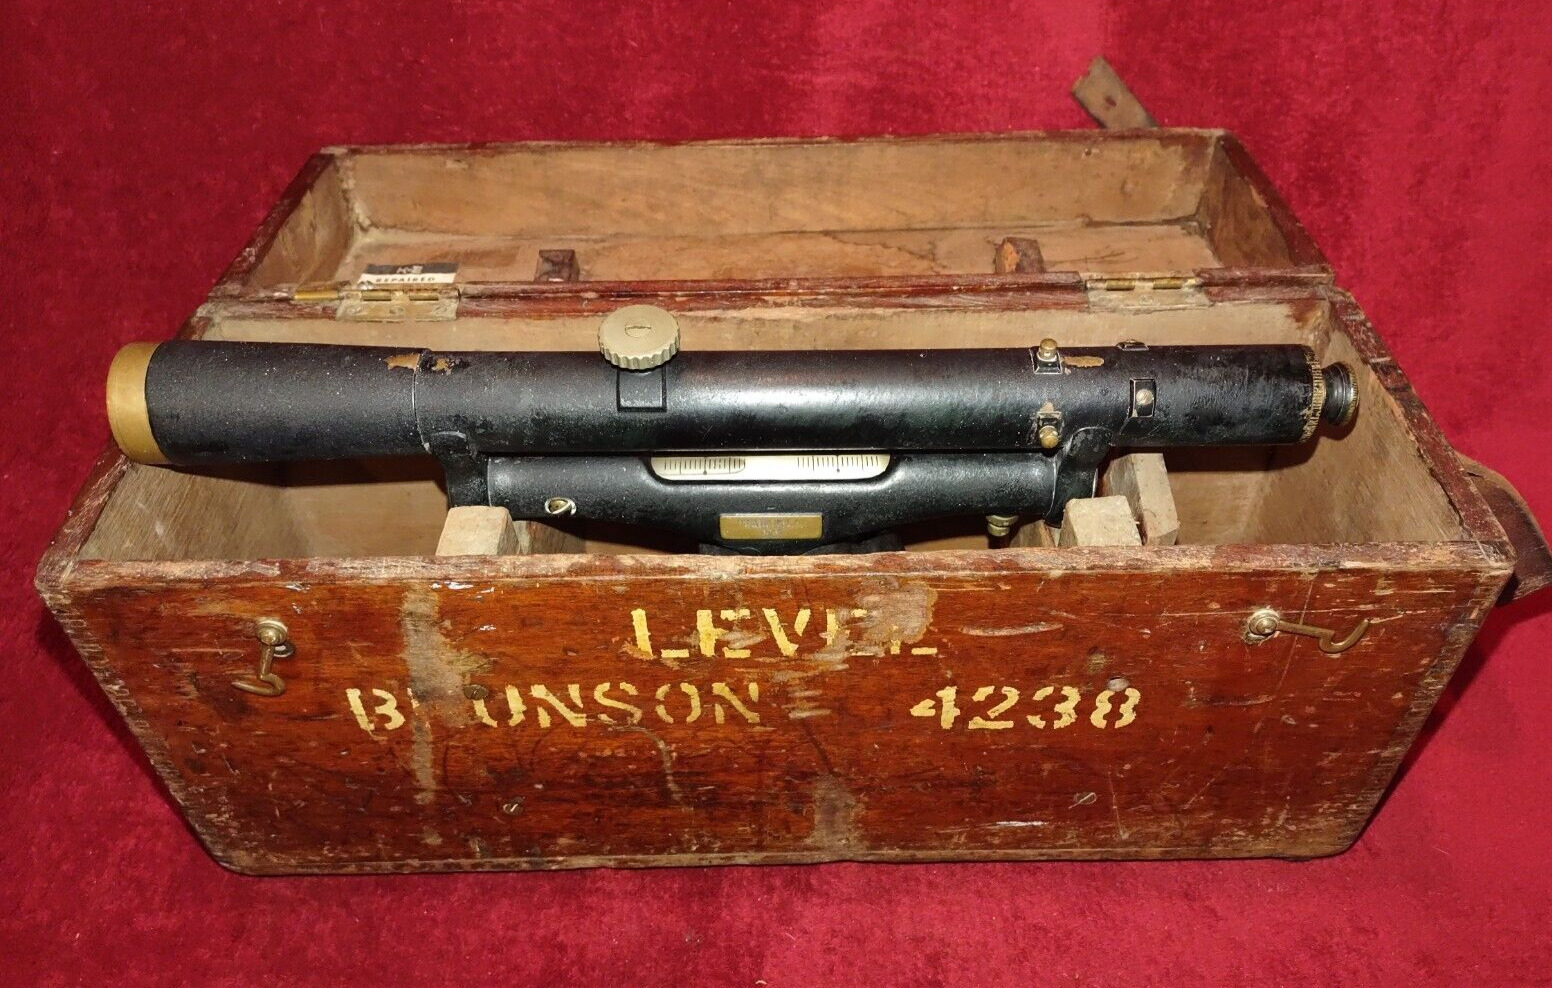 Vintage Brunson Surveying Transit 4238 in Original Wood Box Please Read